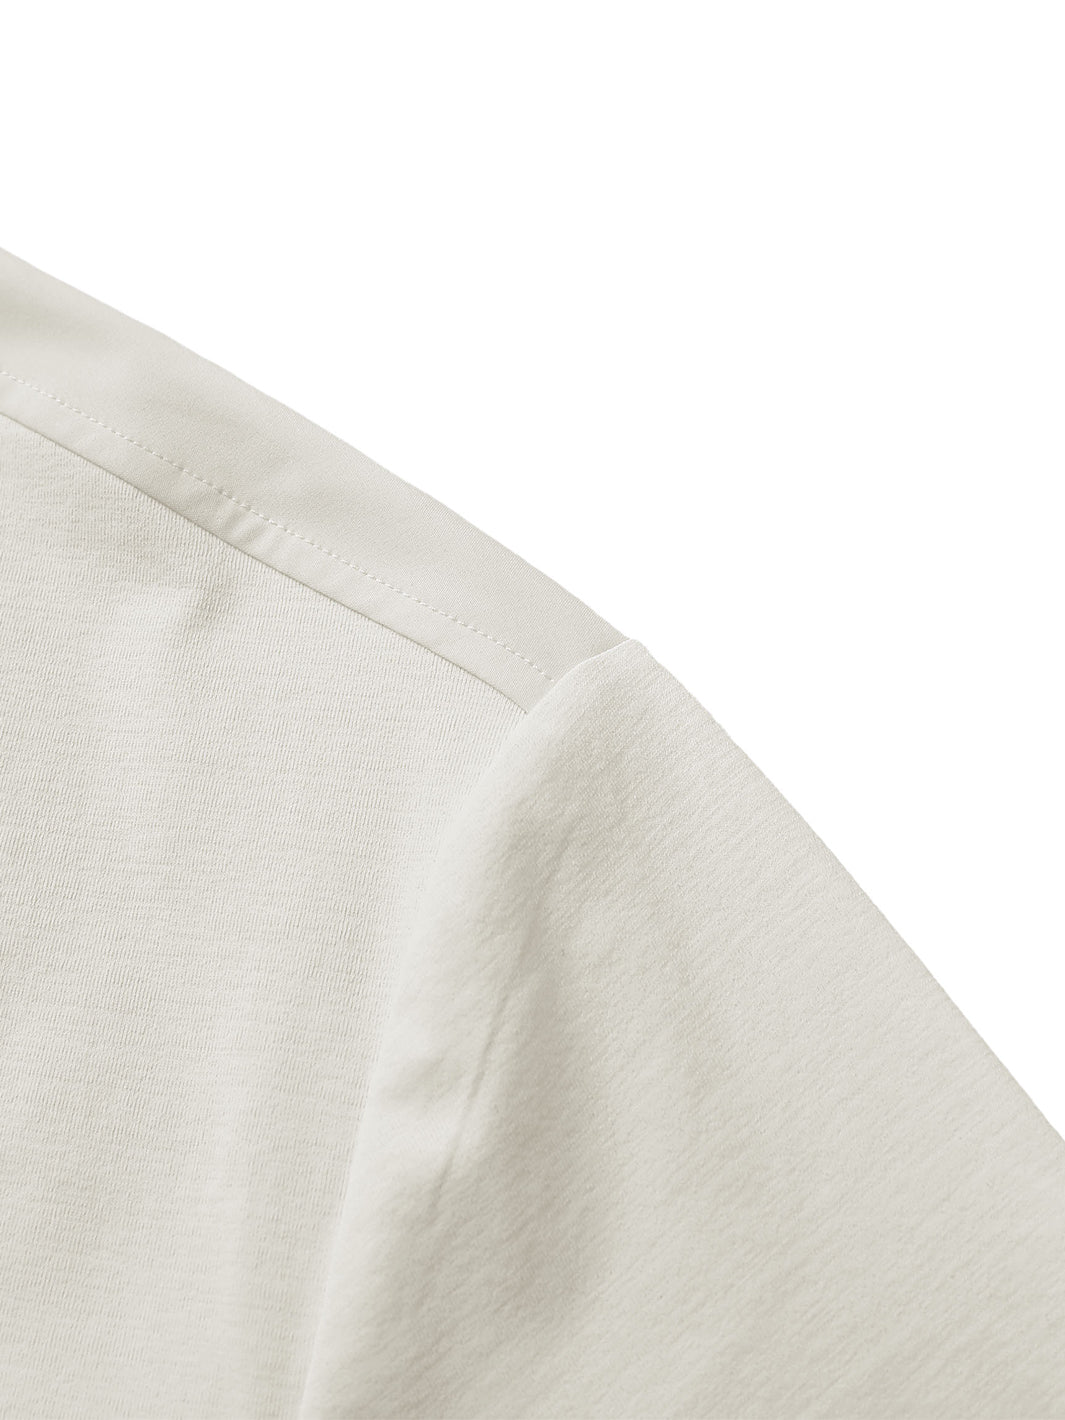 Men's Collarless Pocket Henley Golf Shirts-Cream